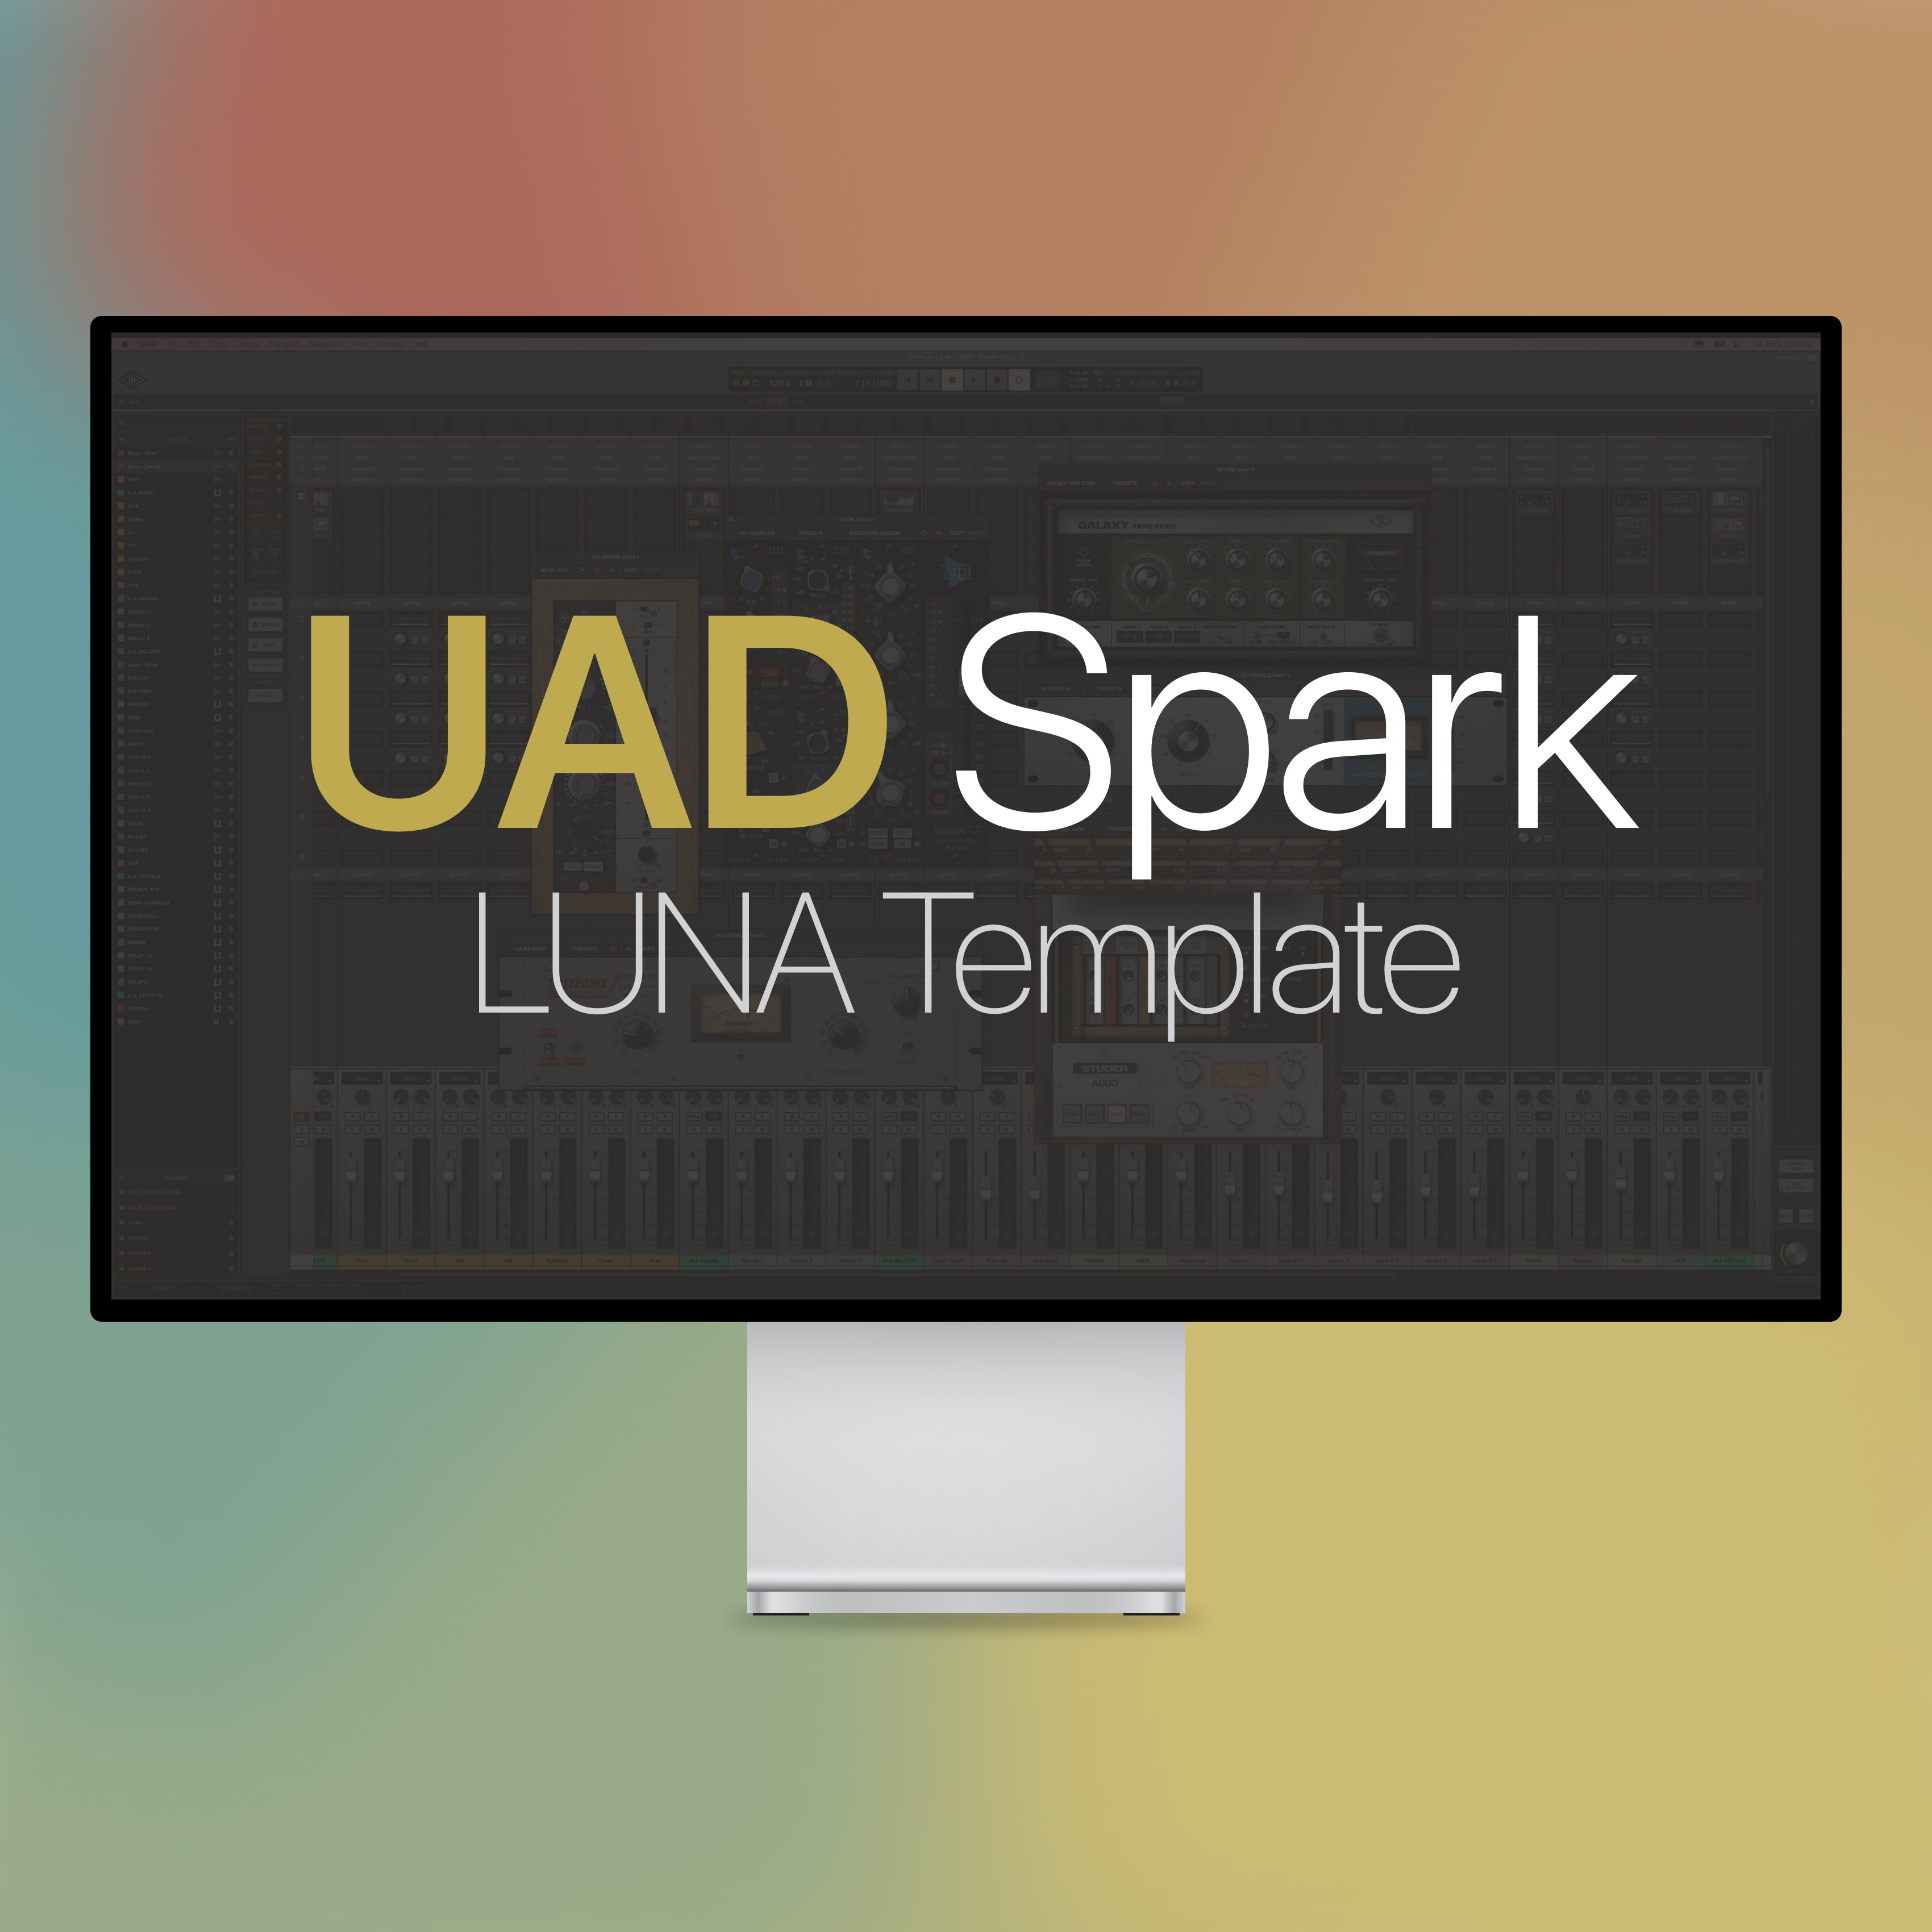 UAD Spark Mix Template (LUNA)